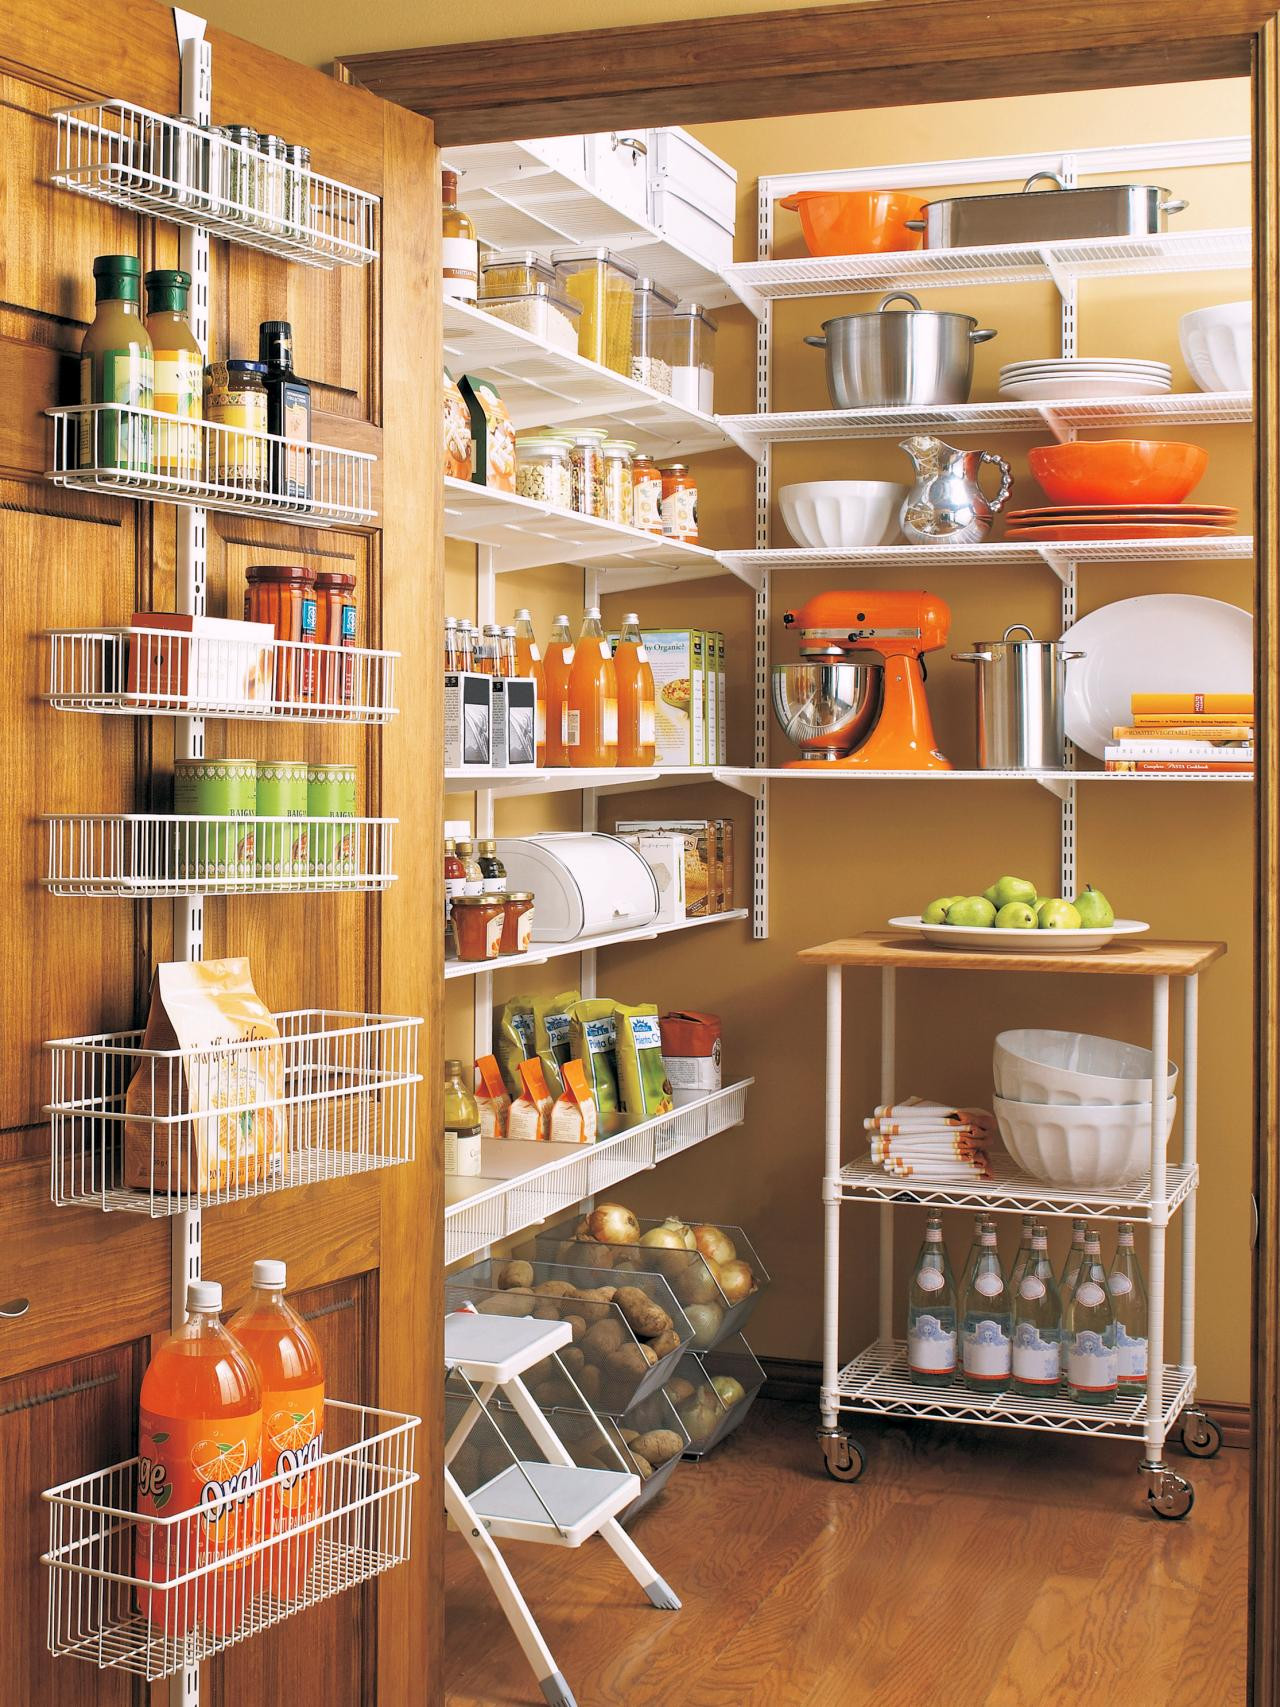 Extra Kitchen Storage Ideas
 51 of Kitchen Pantry Designs & Ideas